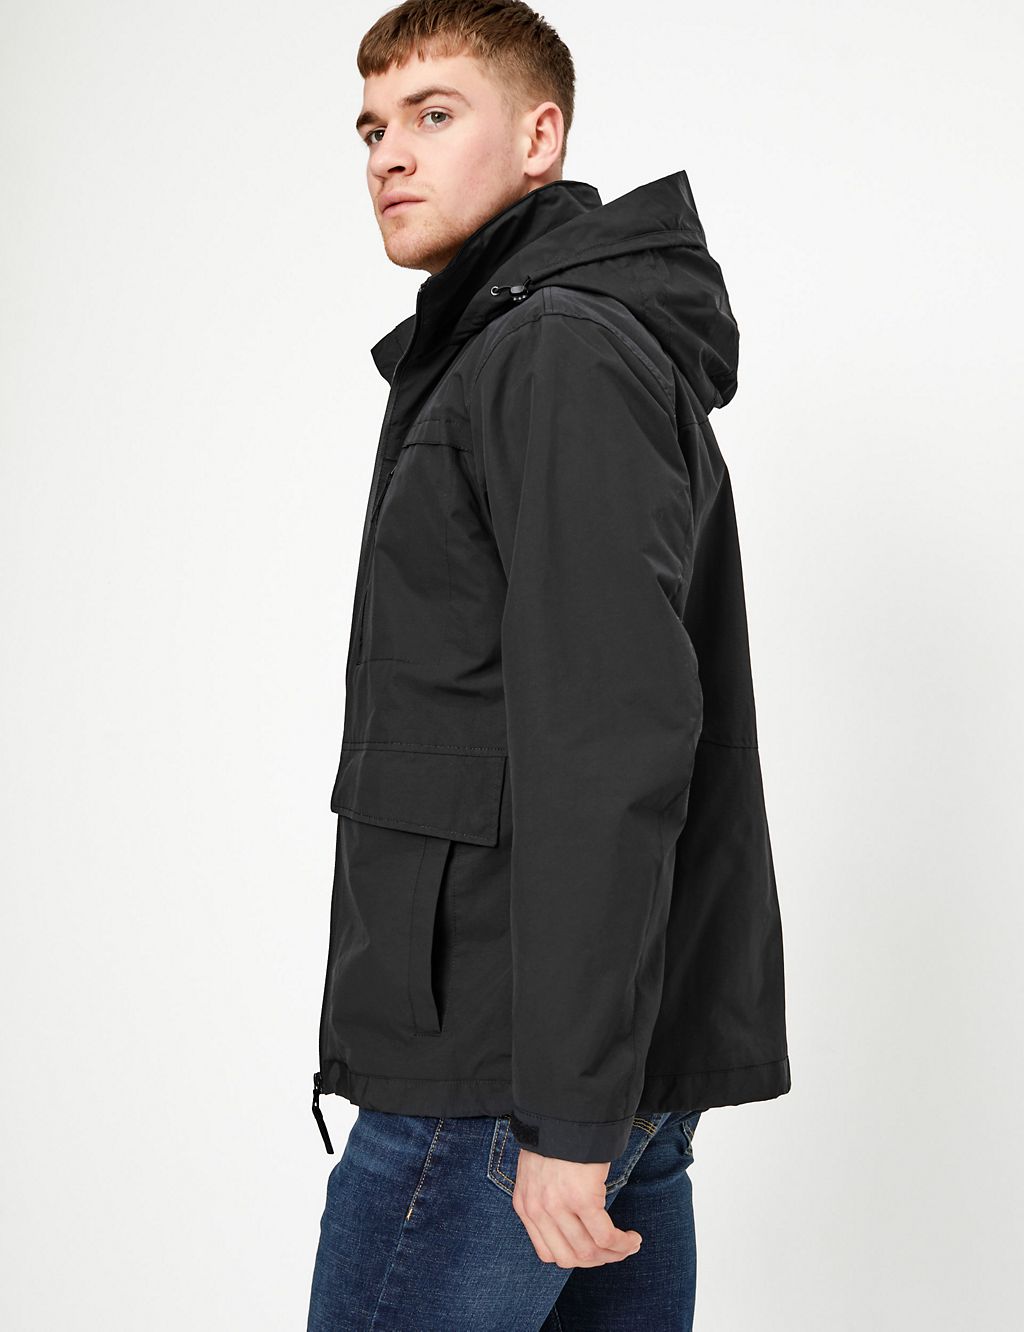 Fleece Lined Jacket with Stormwear™ 4 of 7